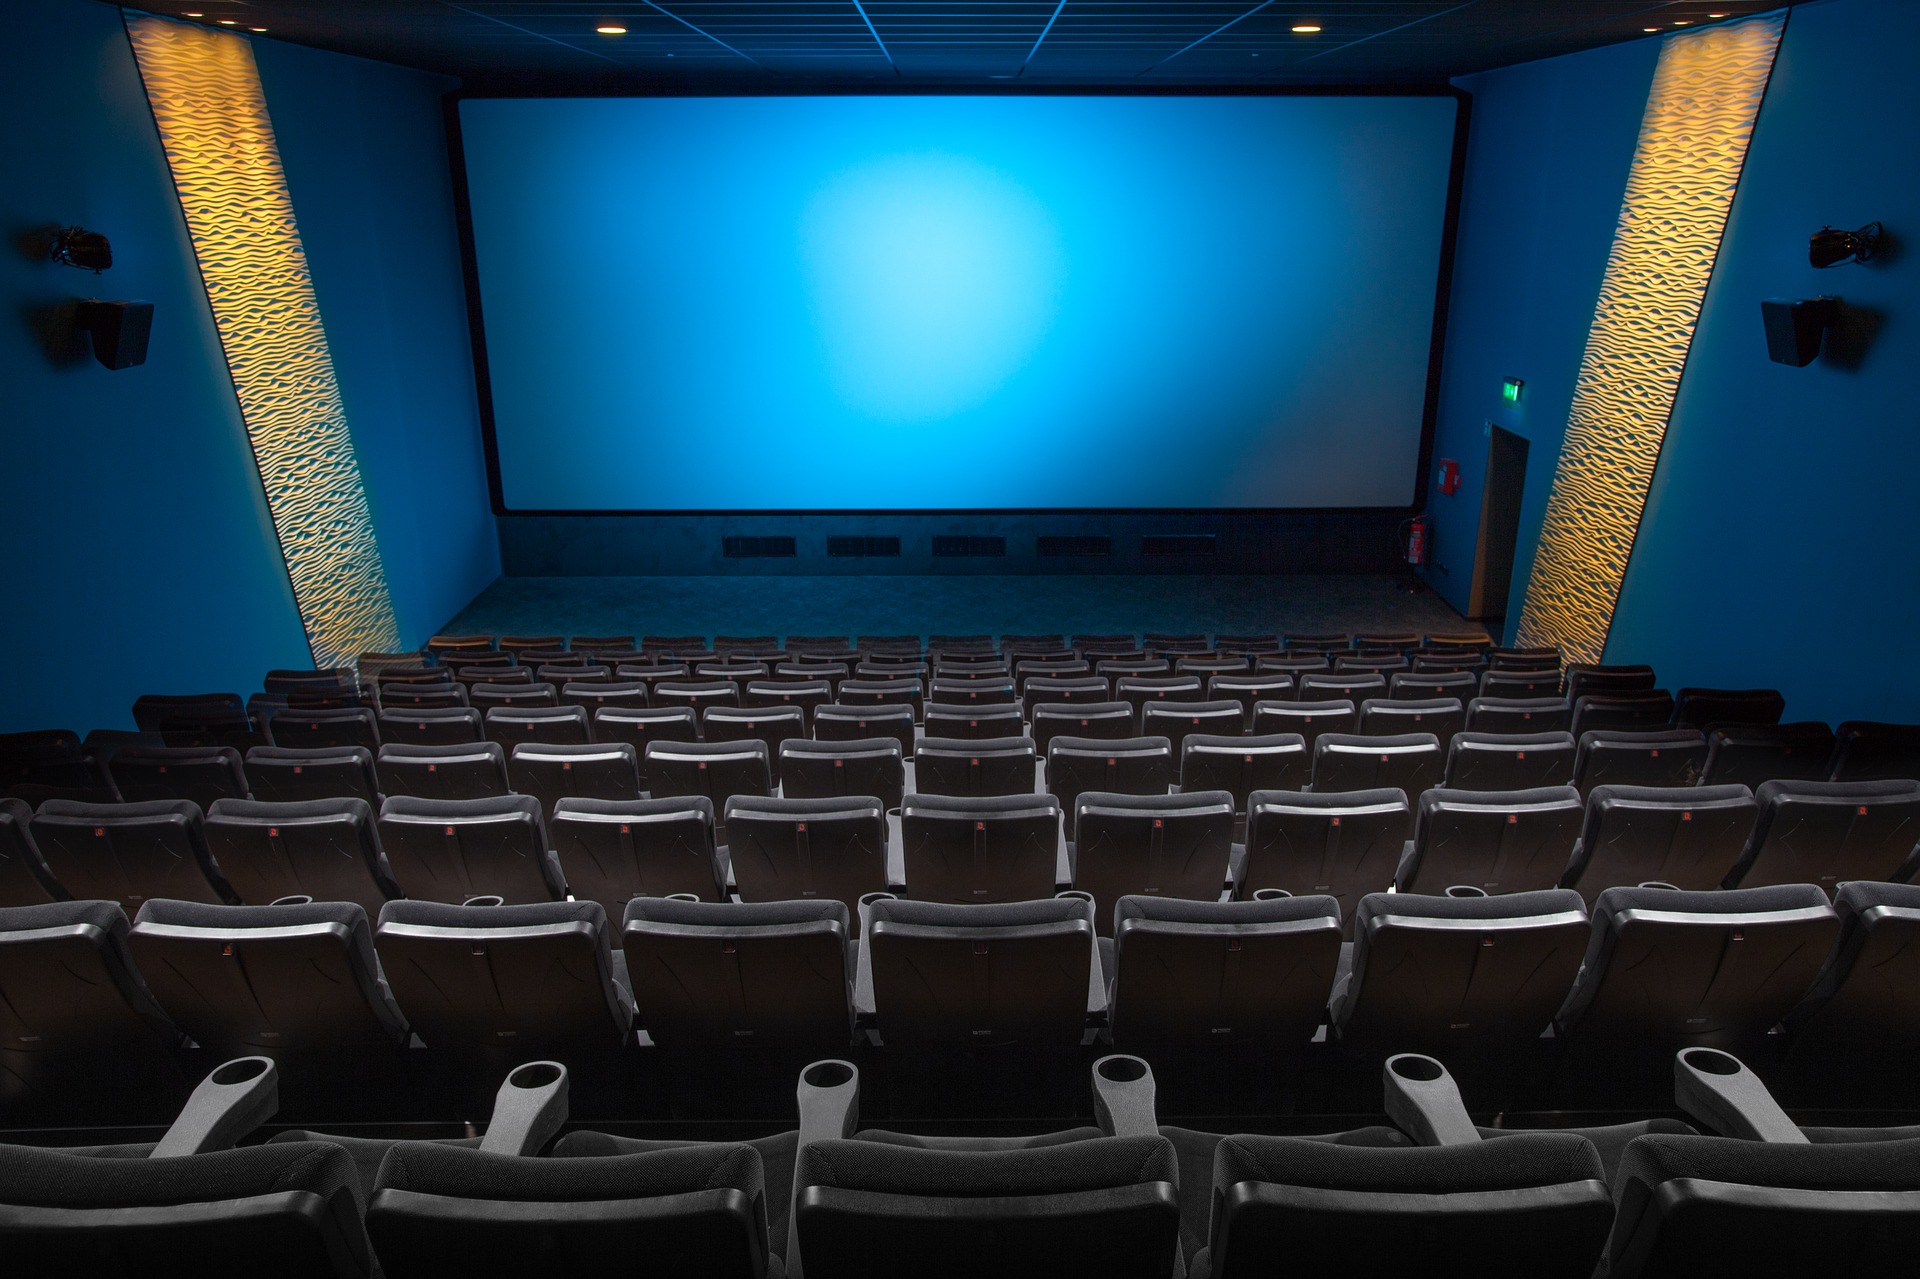 Cinemare: Kinoraum in Blautönen